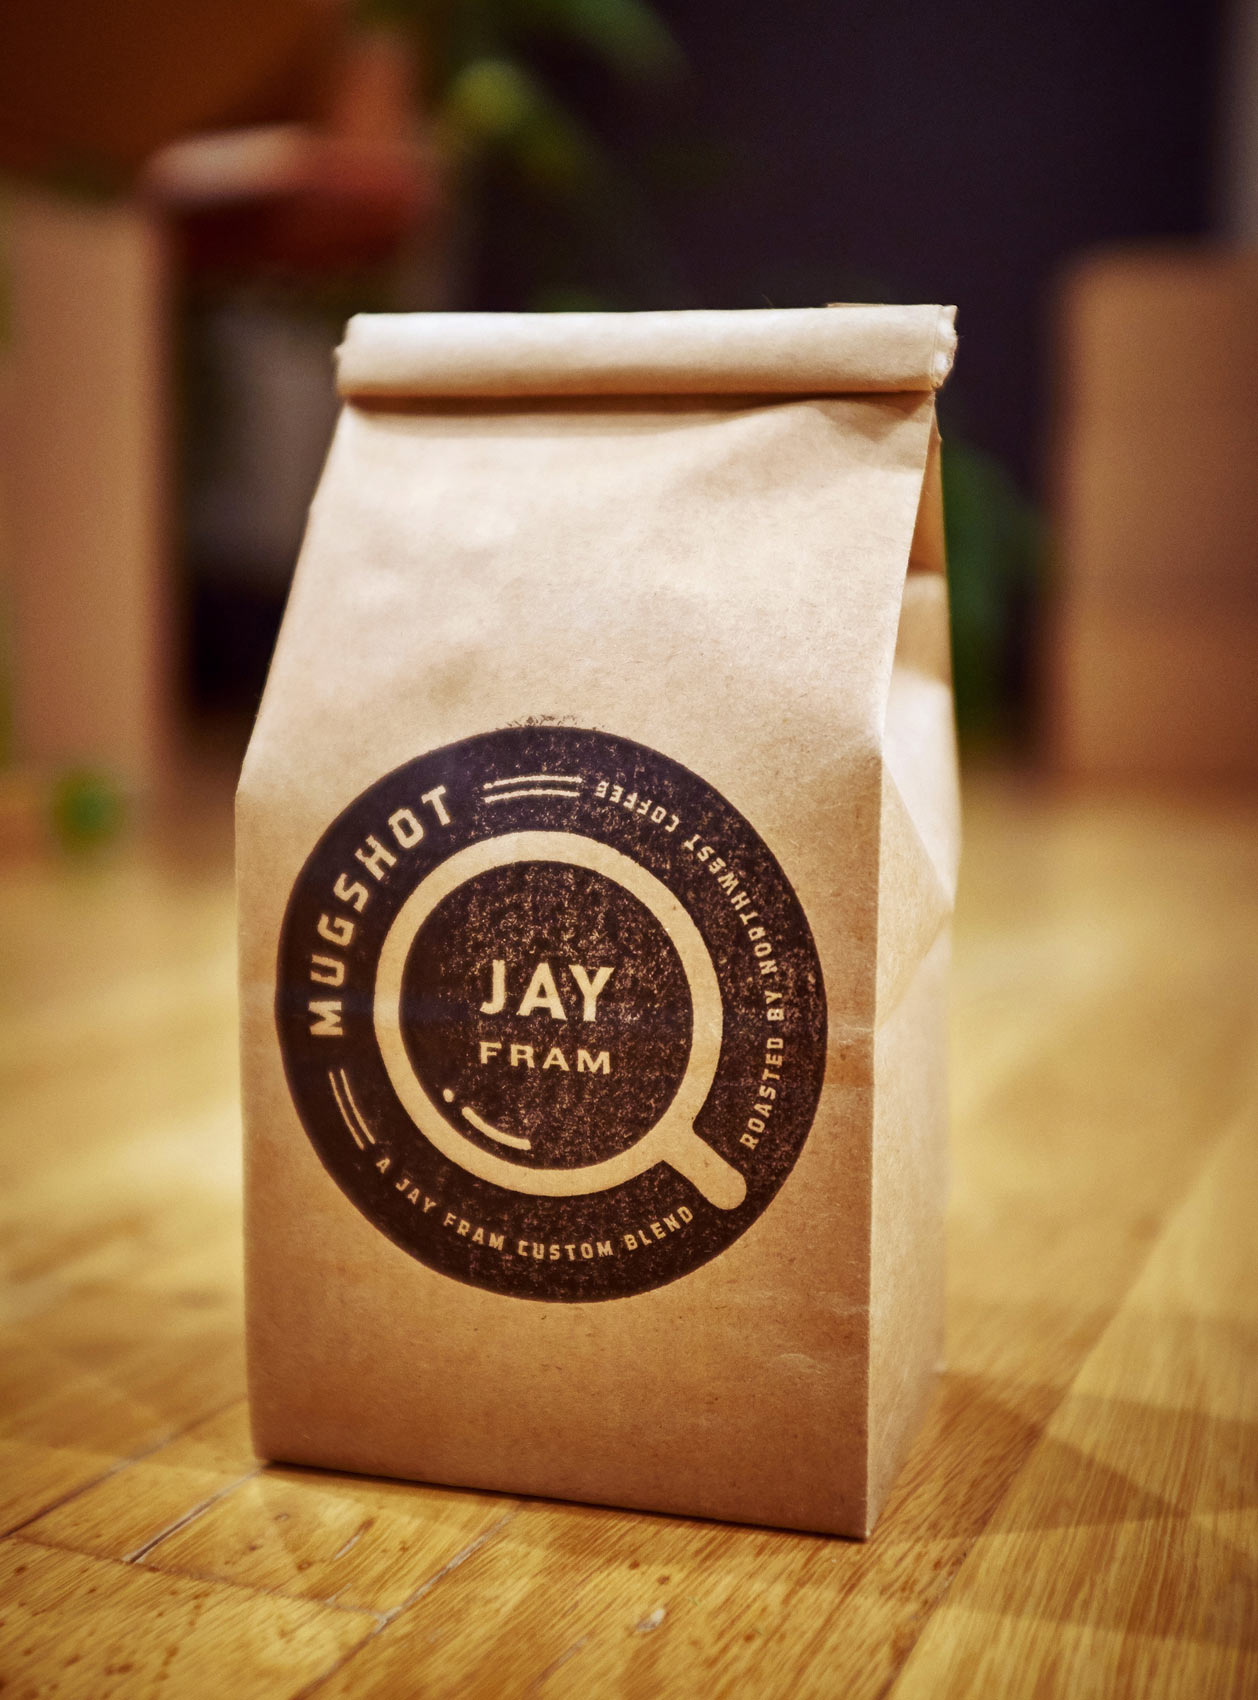 Mugshot, a custom coffee bean blend roasted for Jay Fram by Northwest Coffee in St. Louis, Missouri.